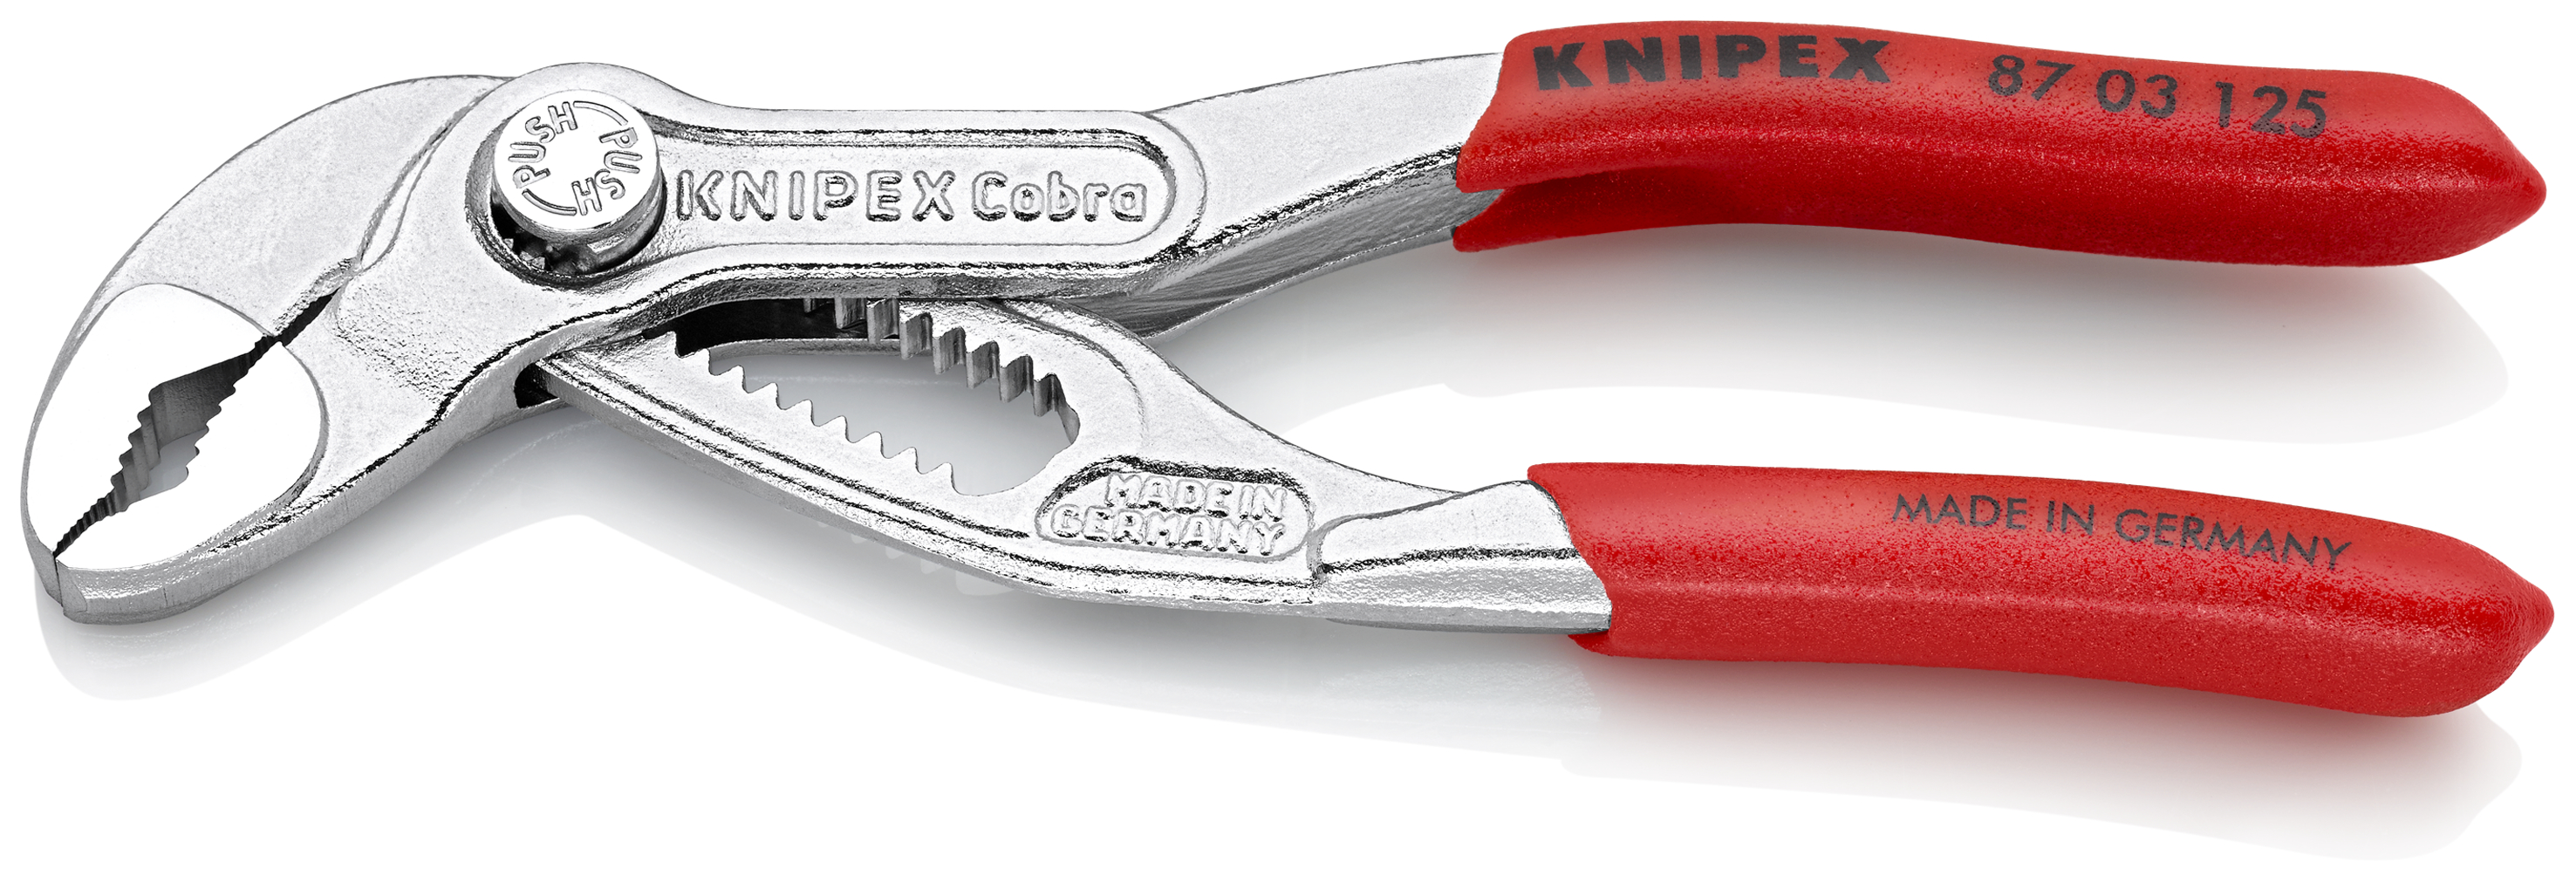 Knipex cobra купить. Клещи Knipex KN-8751250. Клещи Knipex KN-8703250. Книпекс 8705250. Knipex 87 05 250.